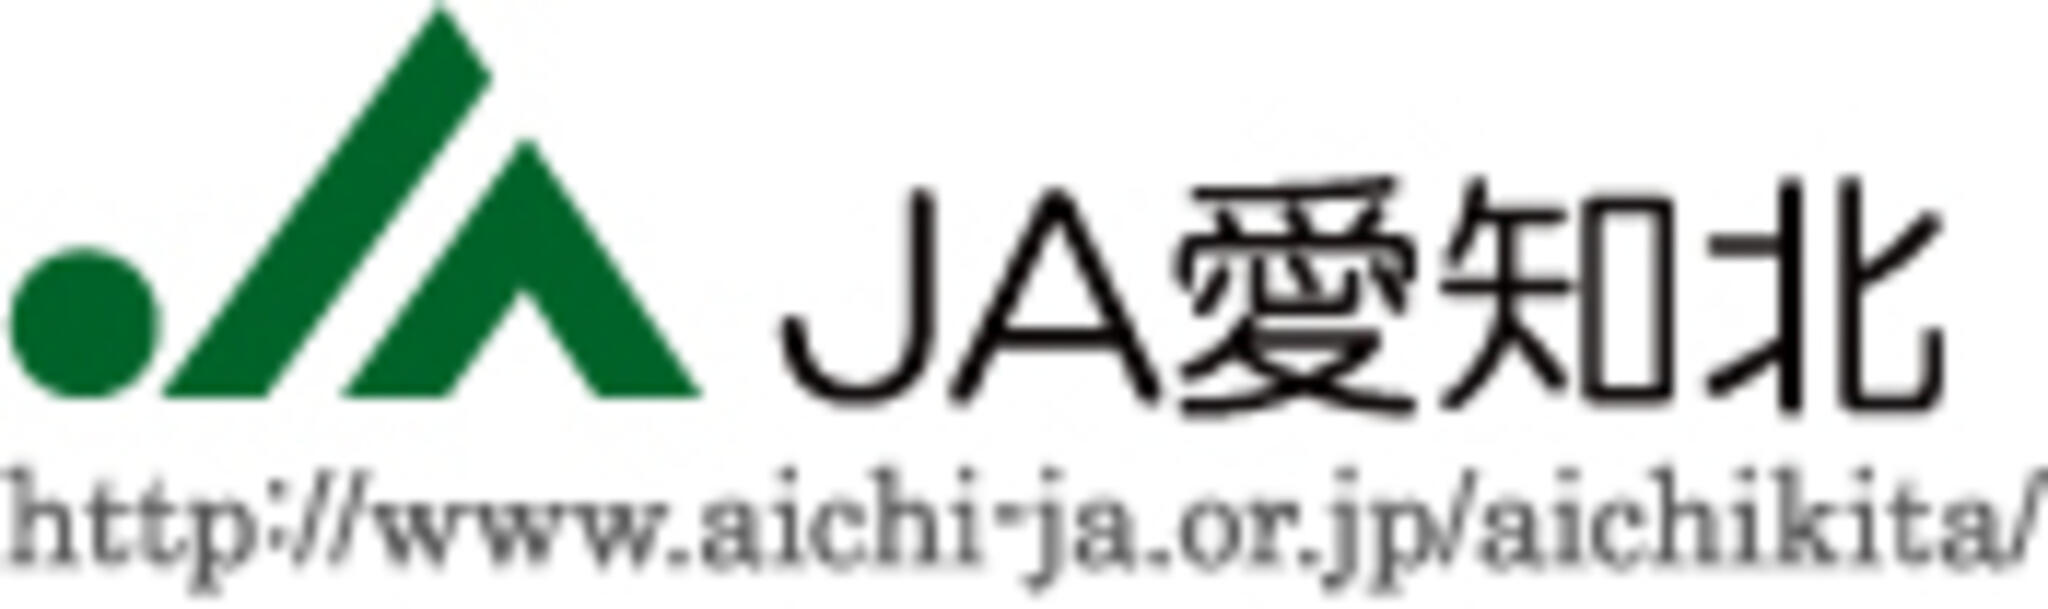 JAバンク ATM 愛知北農業協同組合(JA愛知北)大口支店の代表写真1